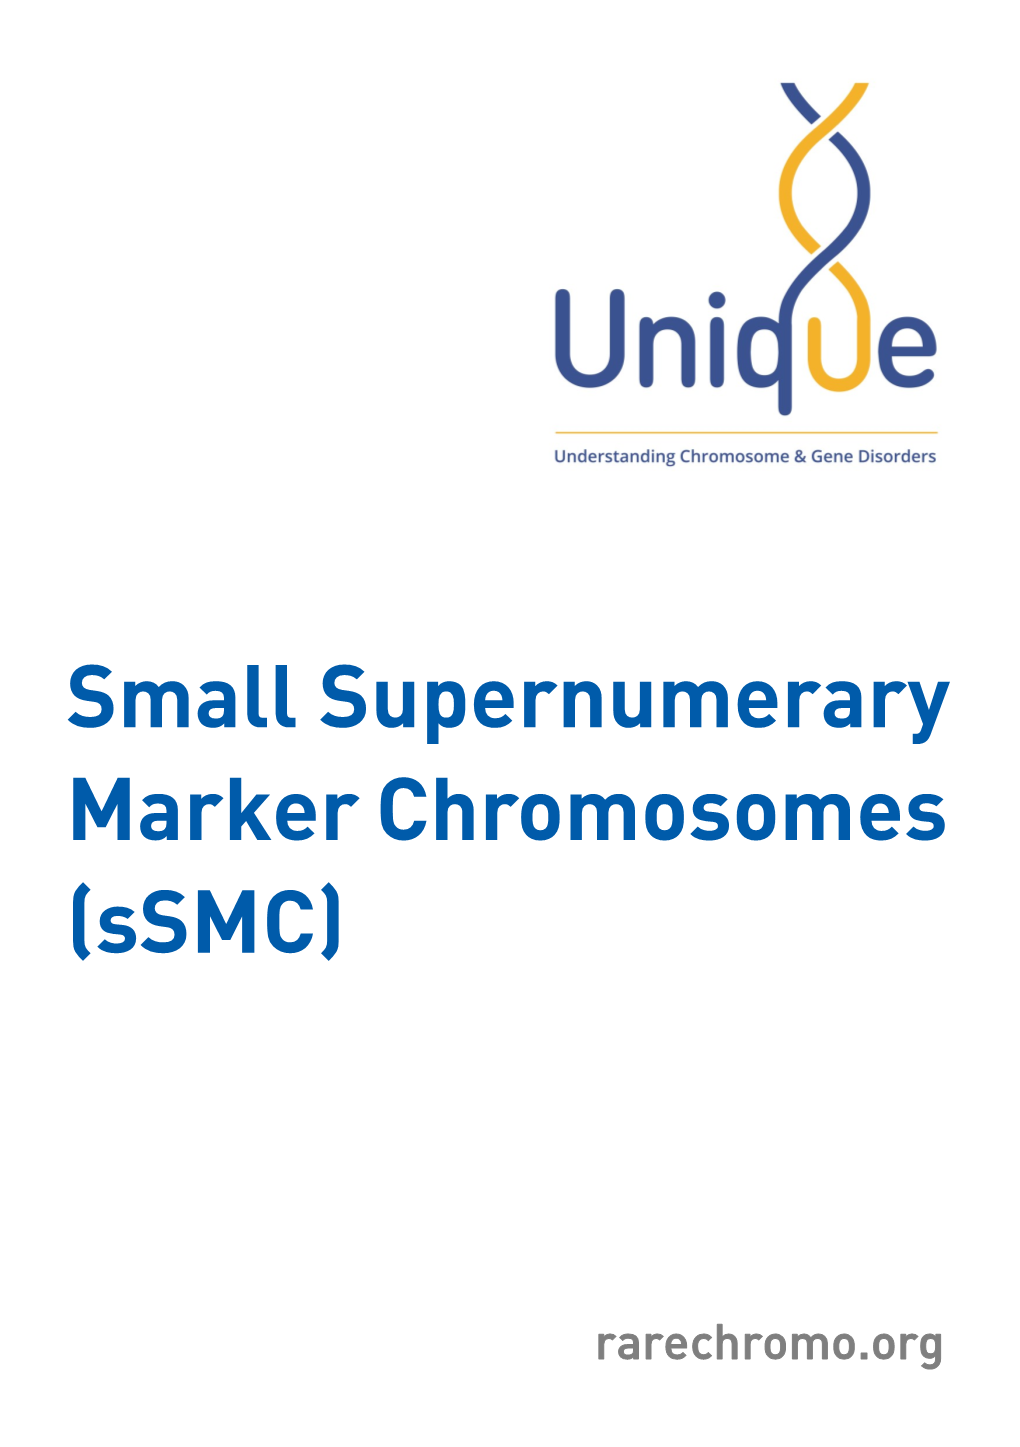 Small Supernumerary Markerchromosomes (Ssmc)